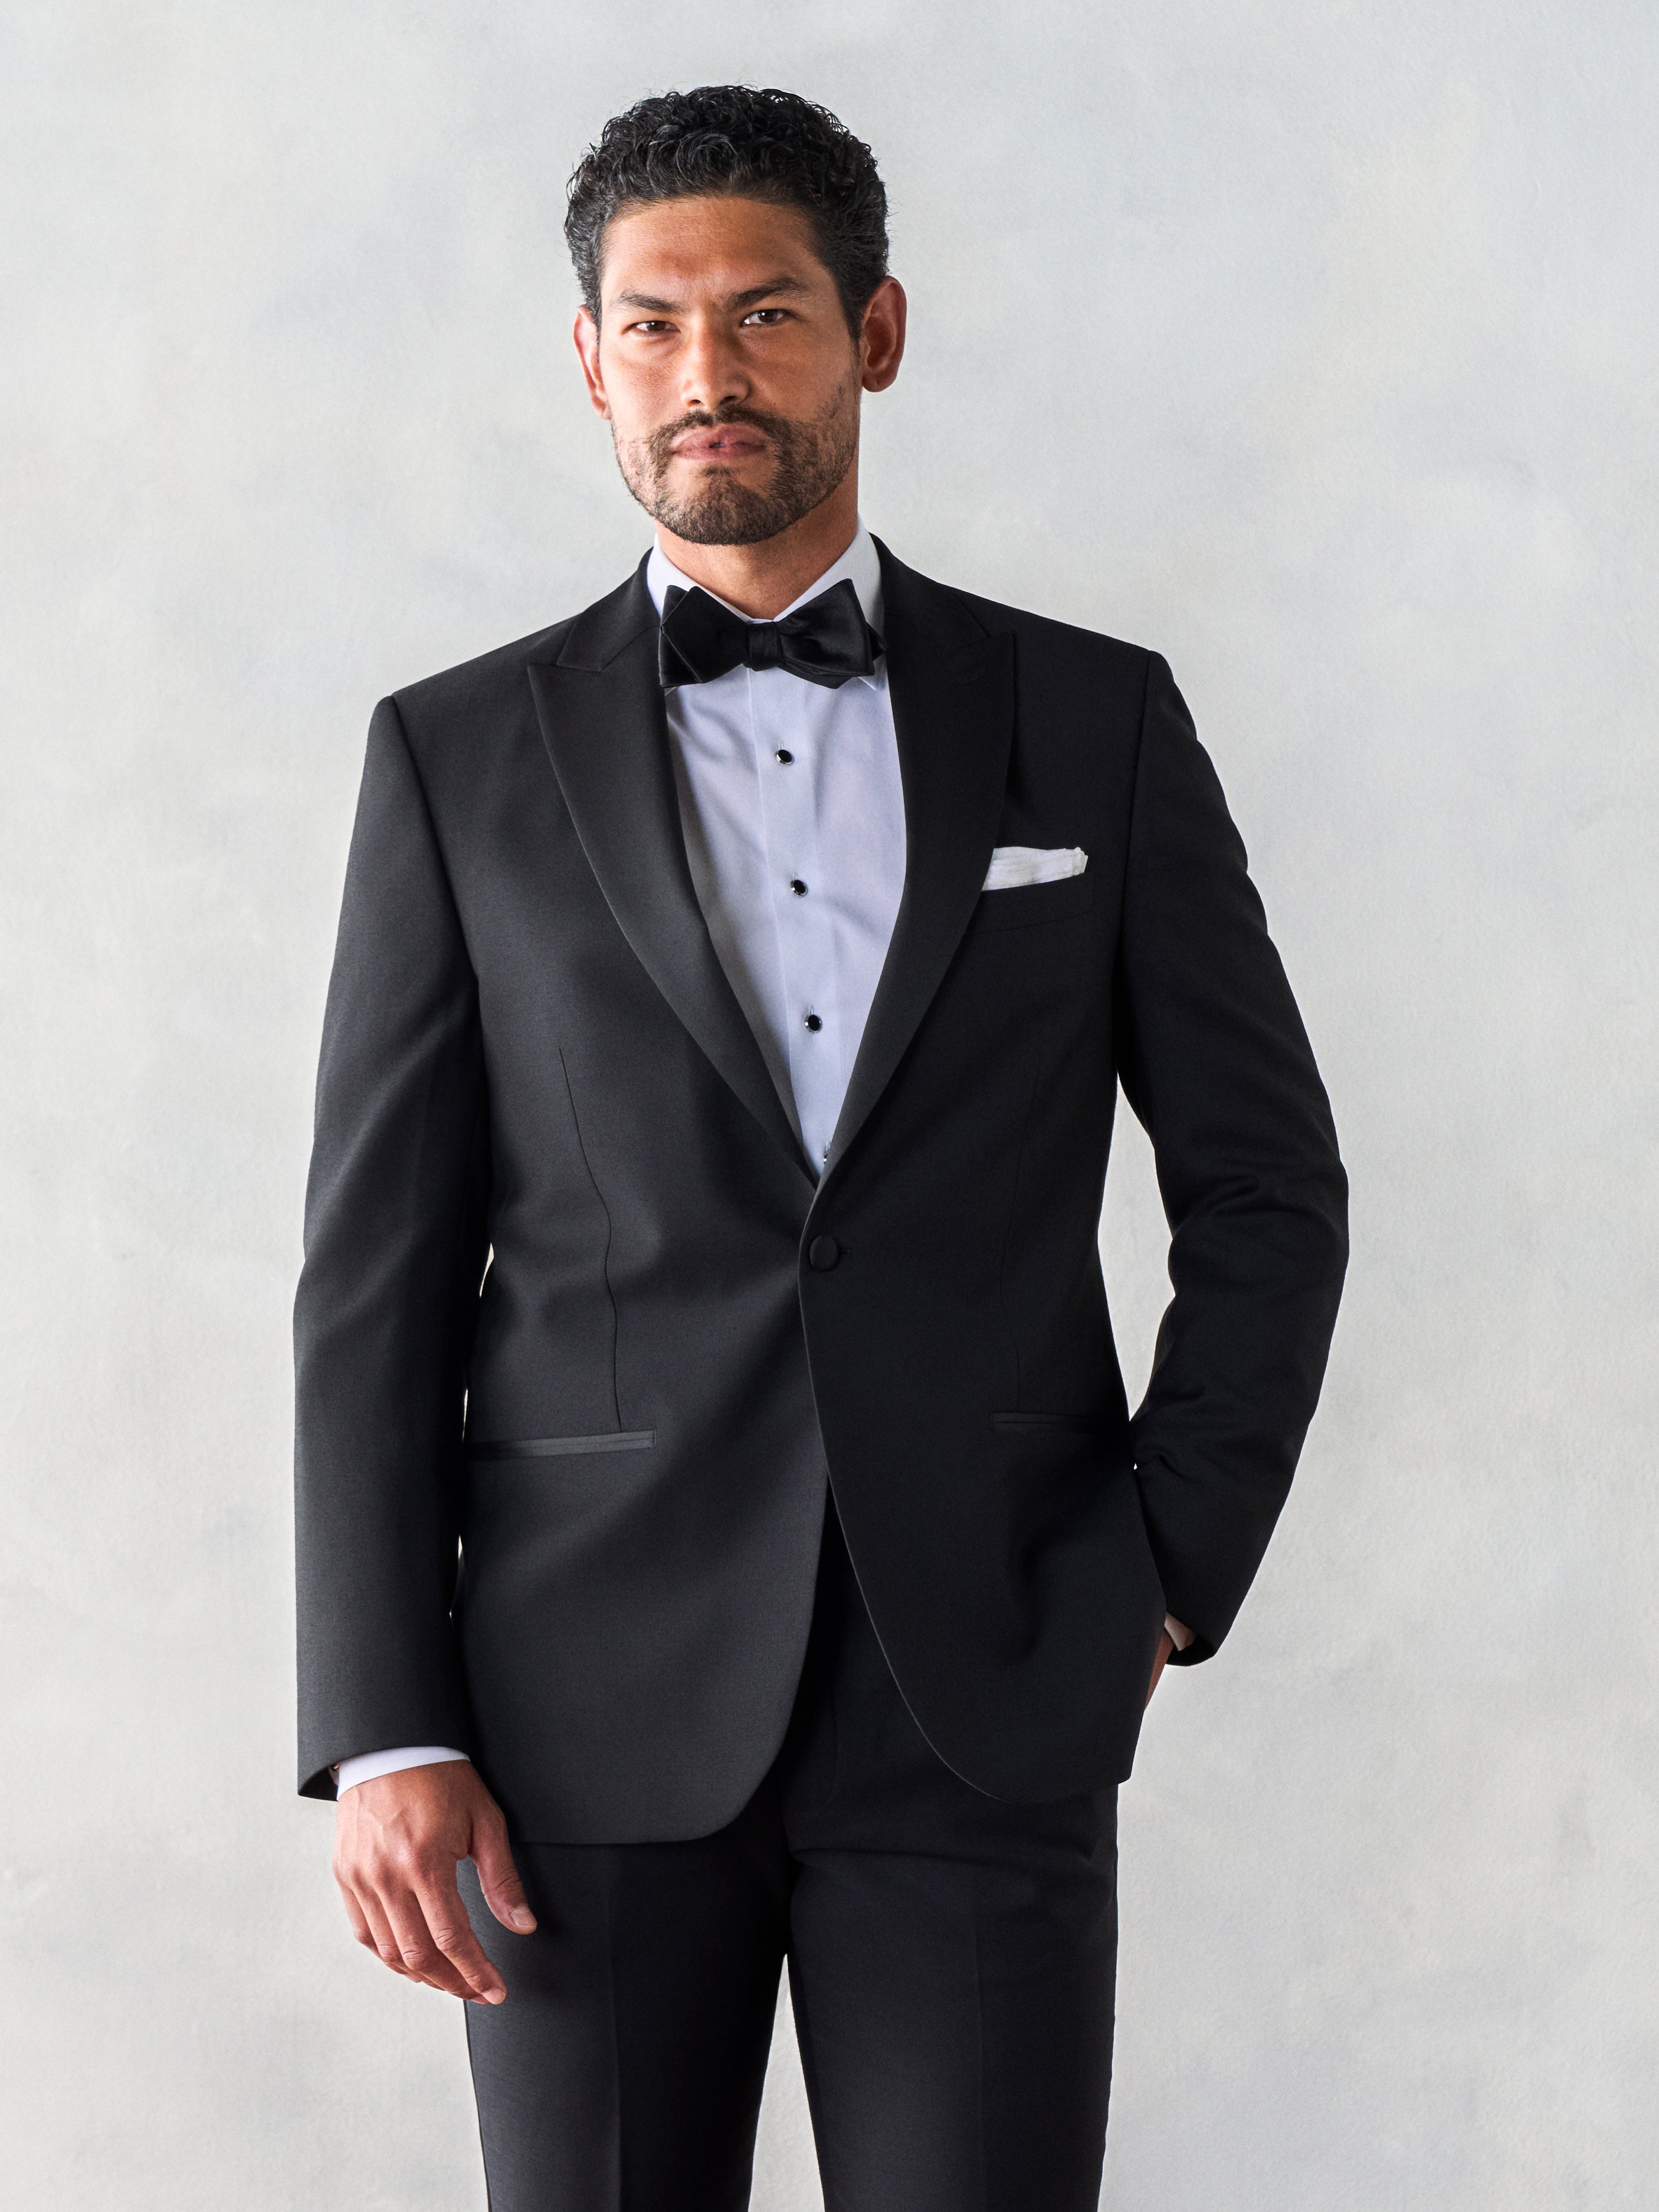 Best Online Suit & Tuxedo Rental for Men | Generation Tux